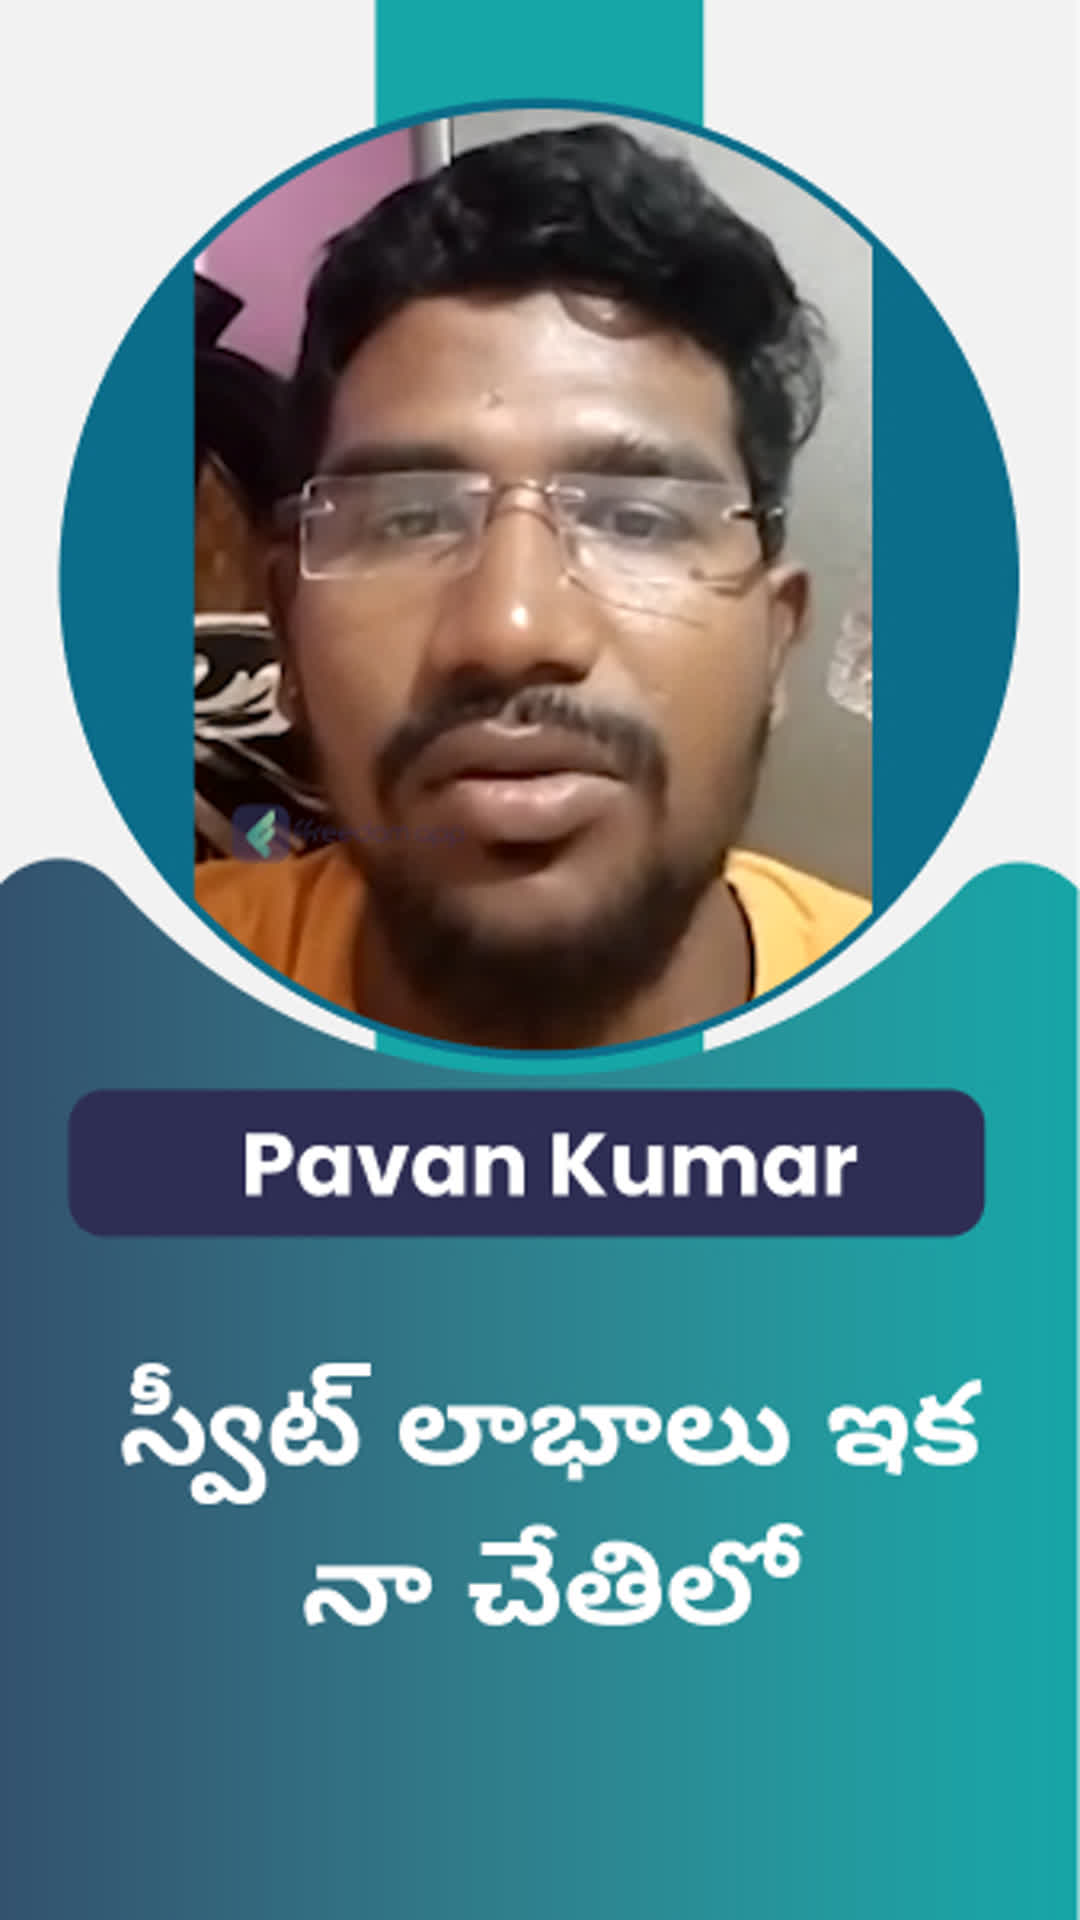 Pavan Kumar's Honest Review of ffreedom app - Thiruvallur ,Telangana